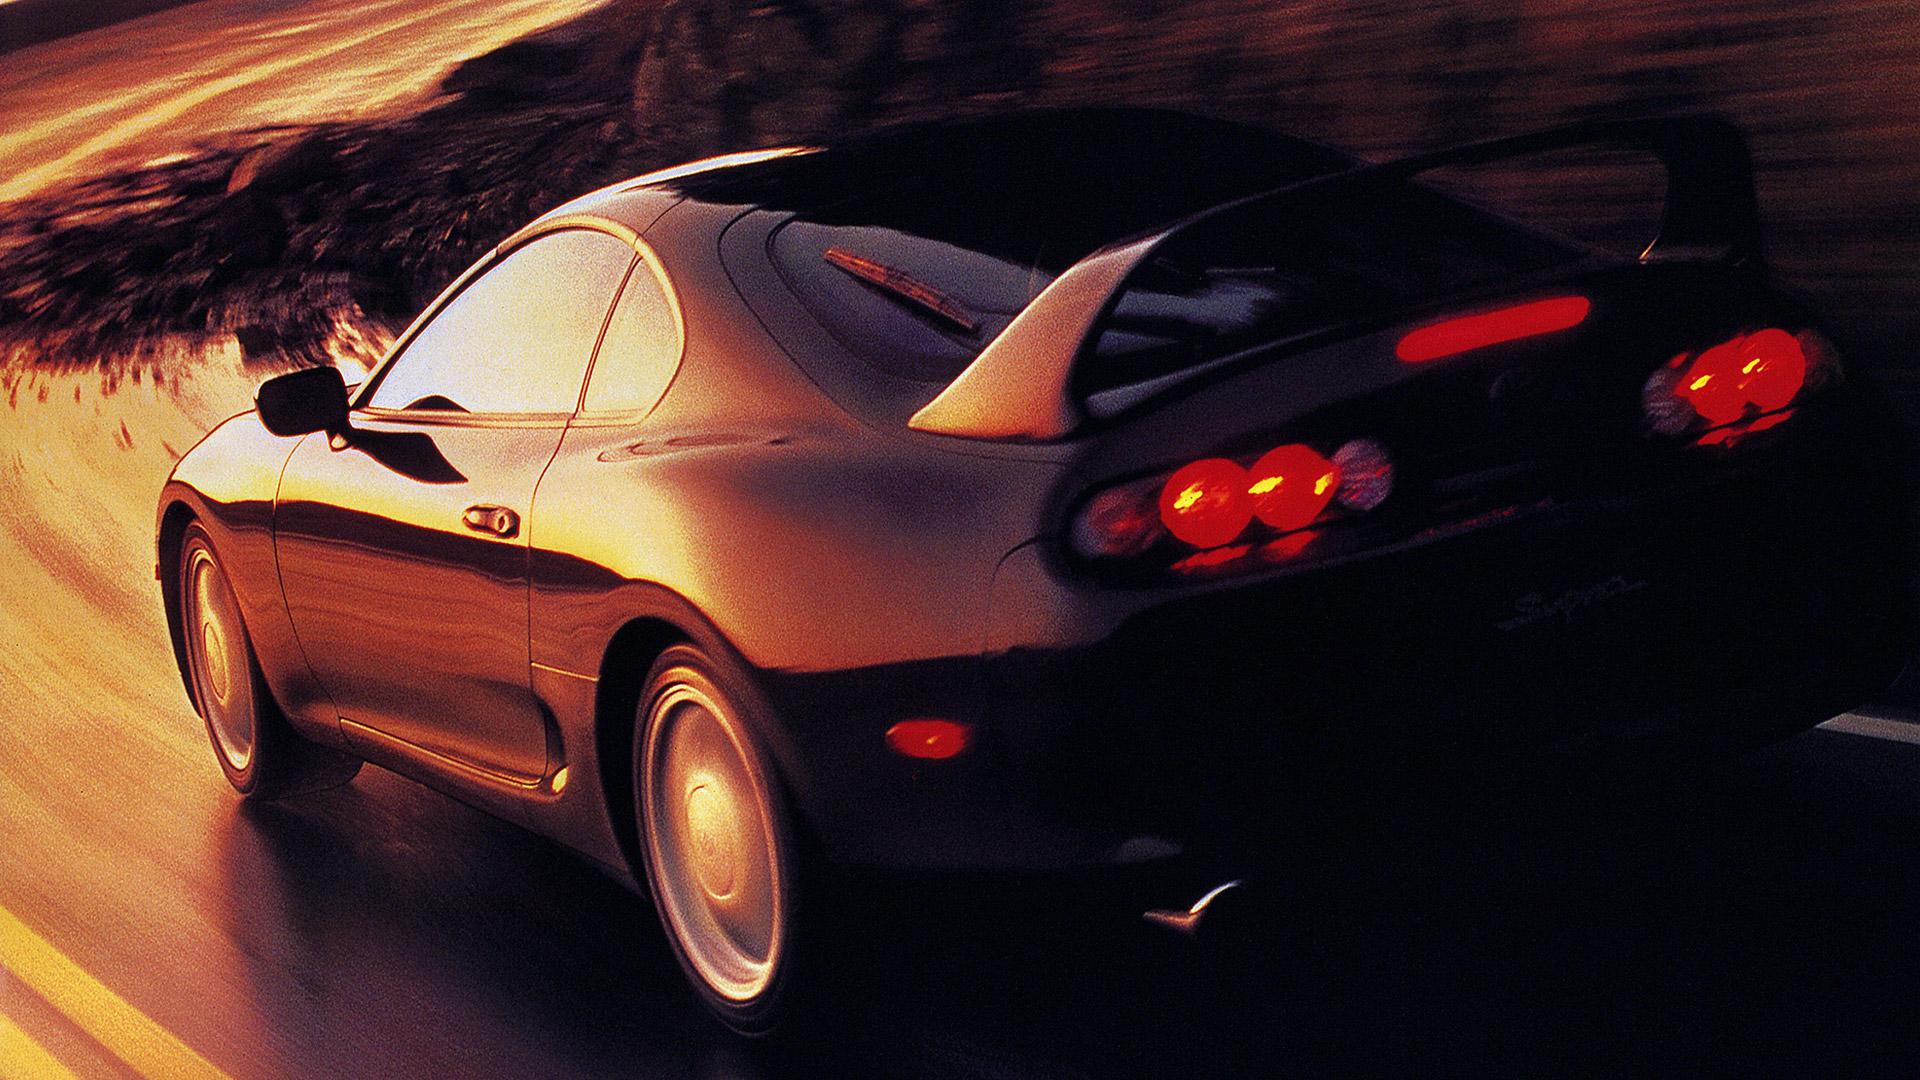  1993 Toyota Supra Wallpaper.